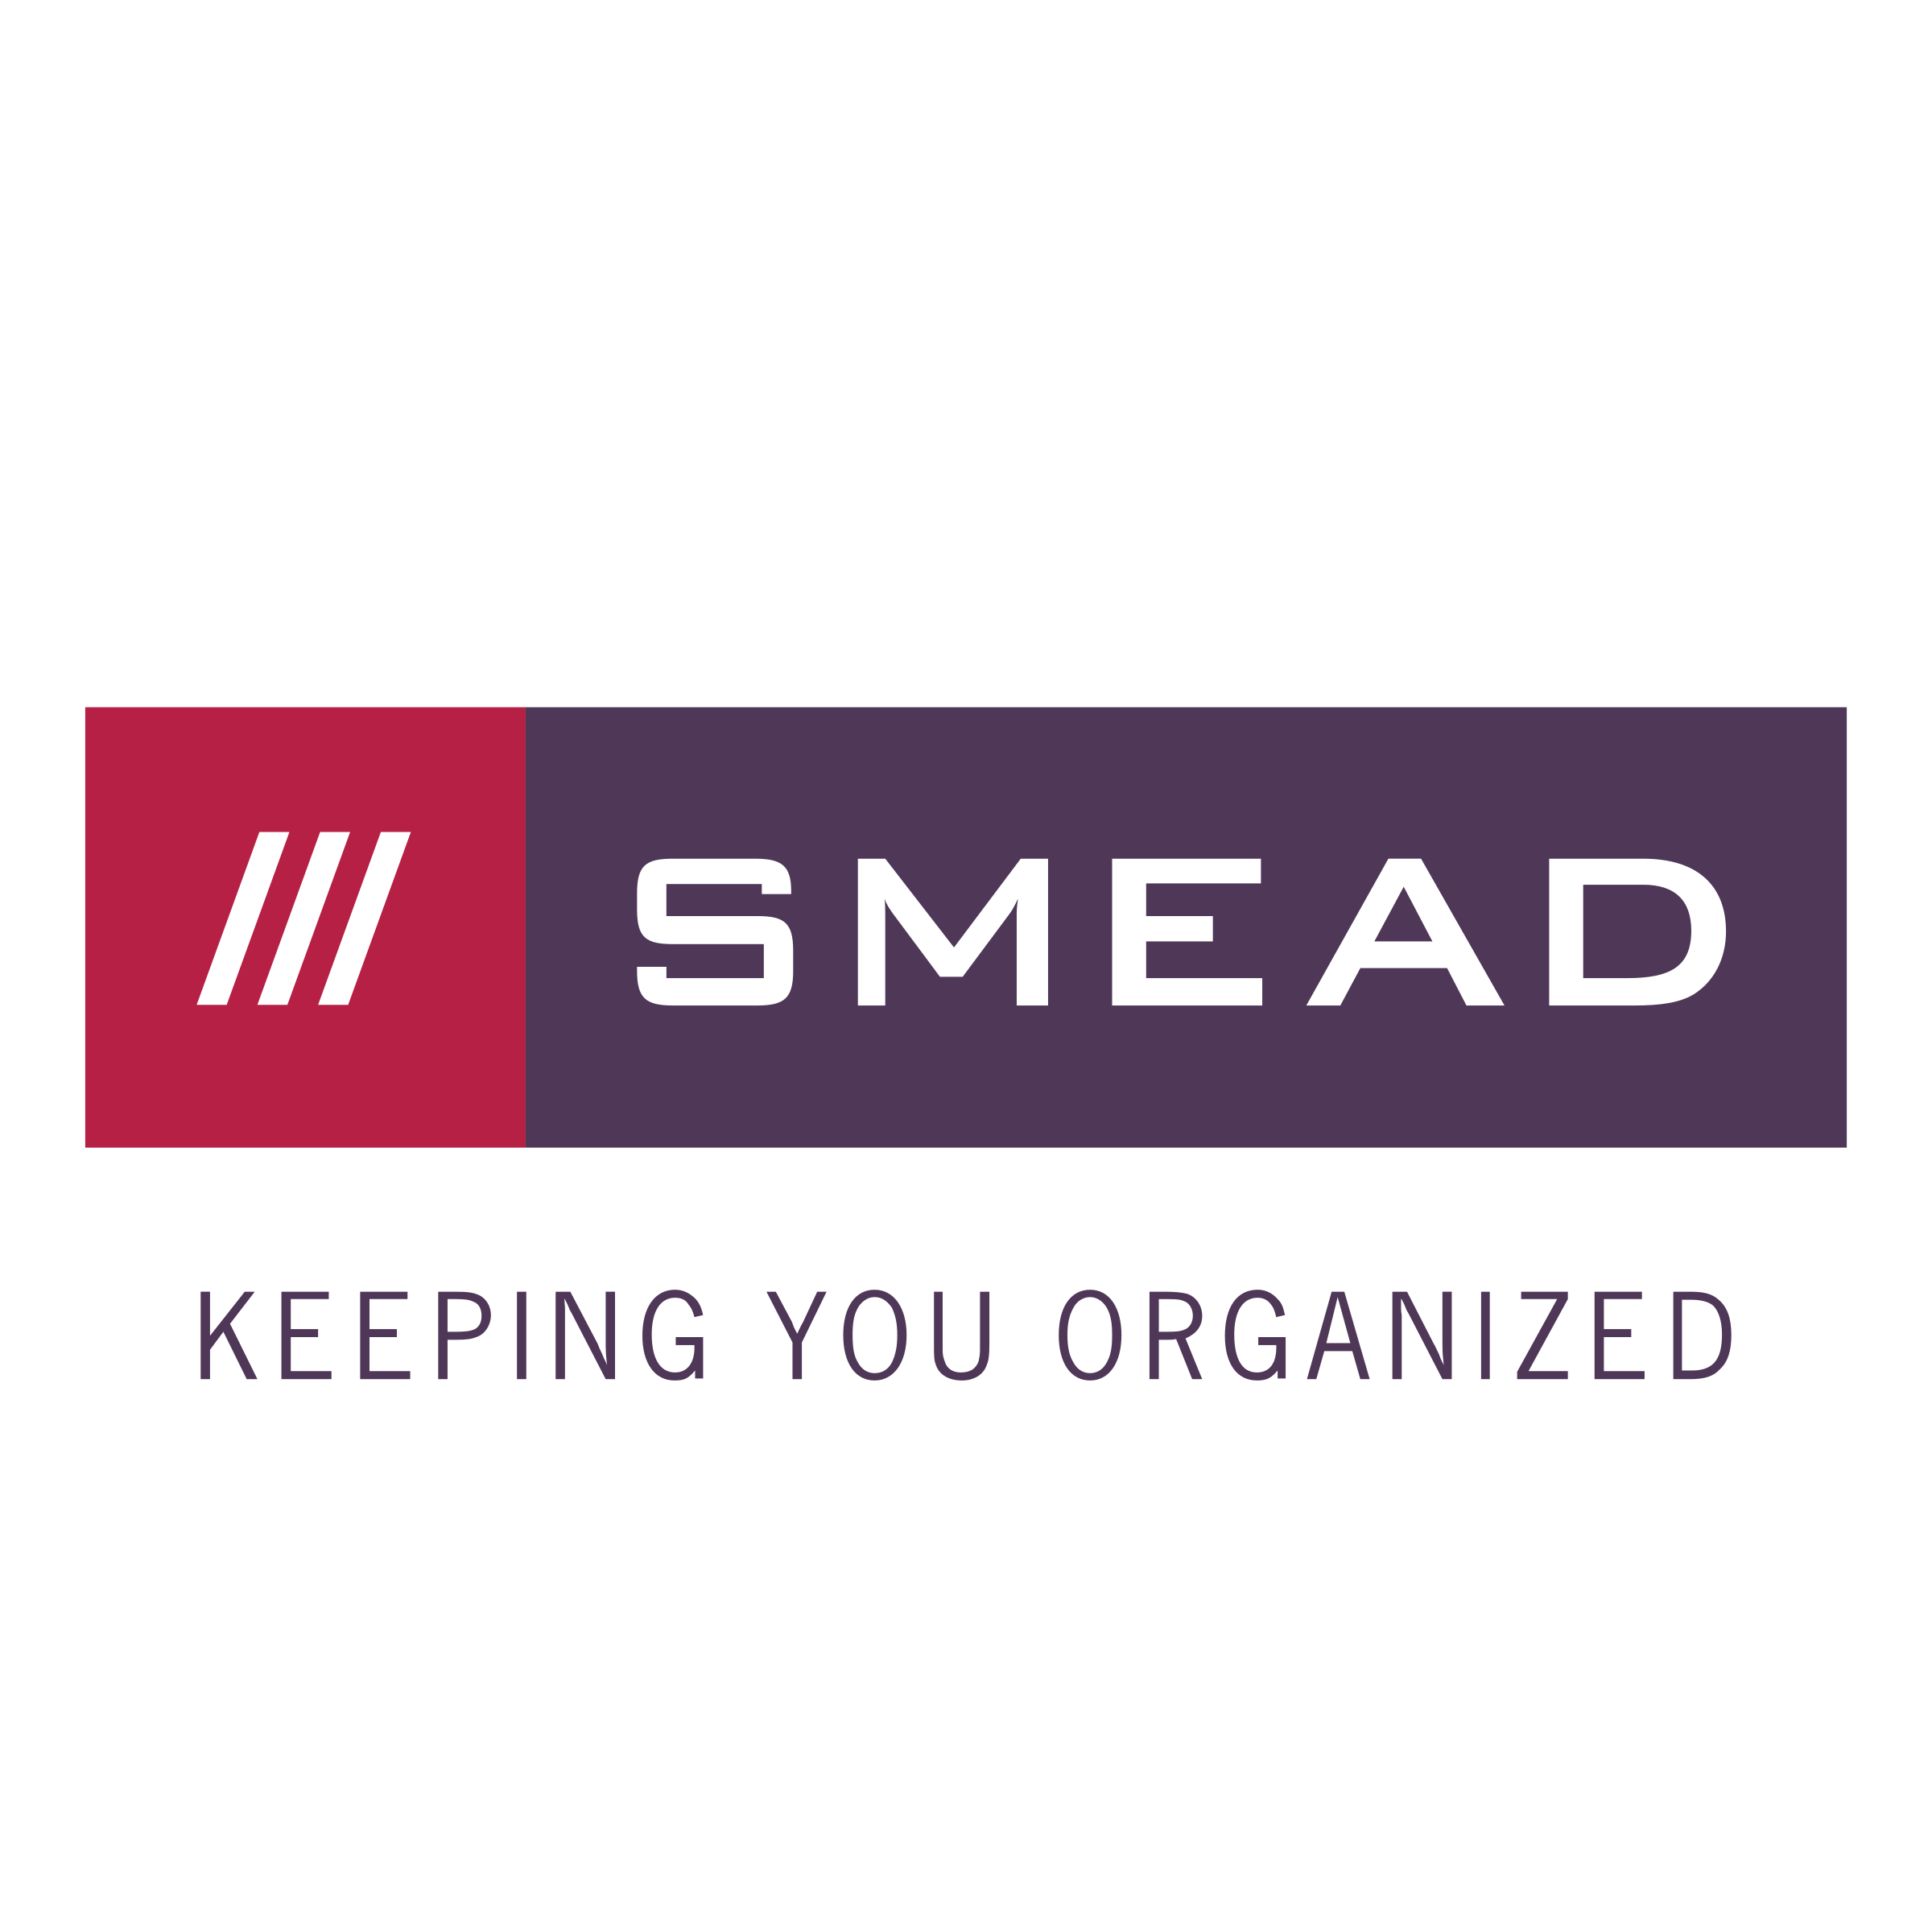 Smead Logo - Smead Manufacturing Logo PNG Transparent & SVG Vector - Freebie Supply